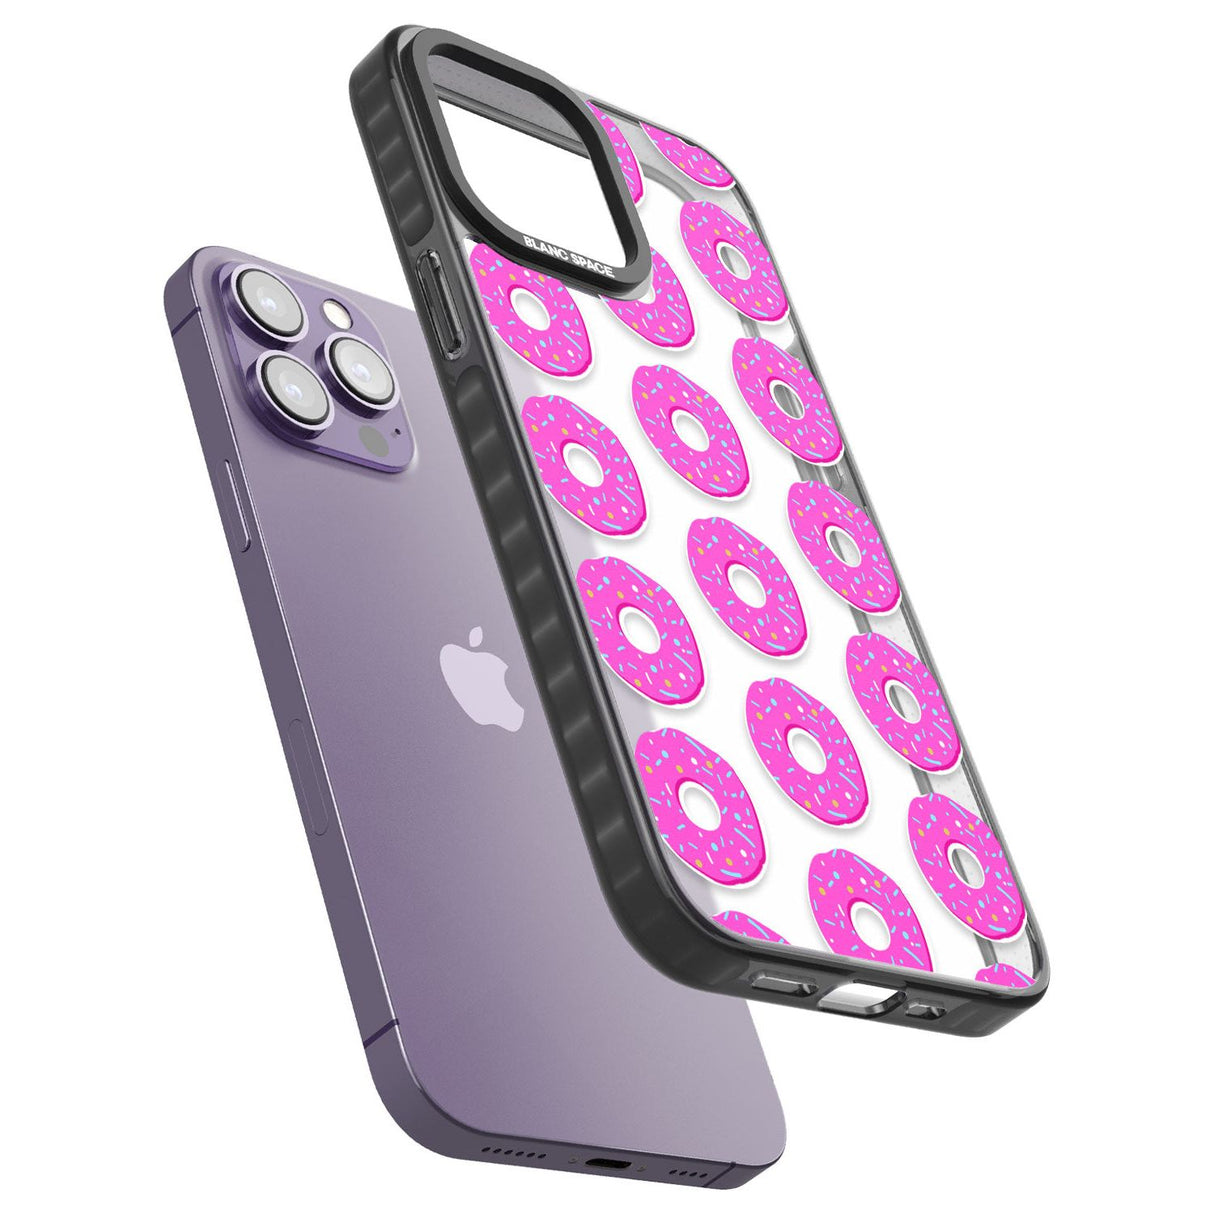 Lollipop PatternPhone Case for iPhone 14 Pro Max